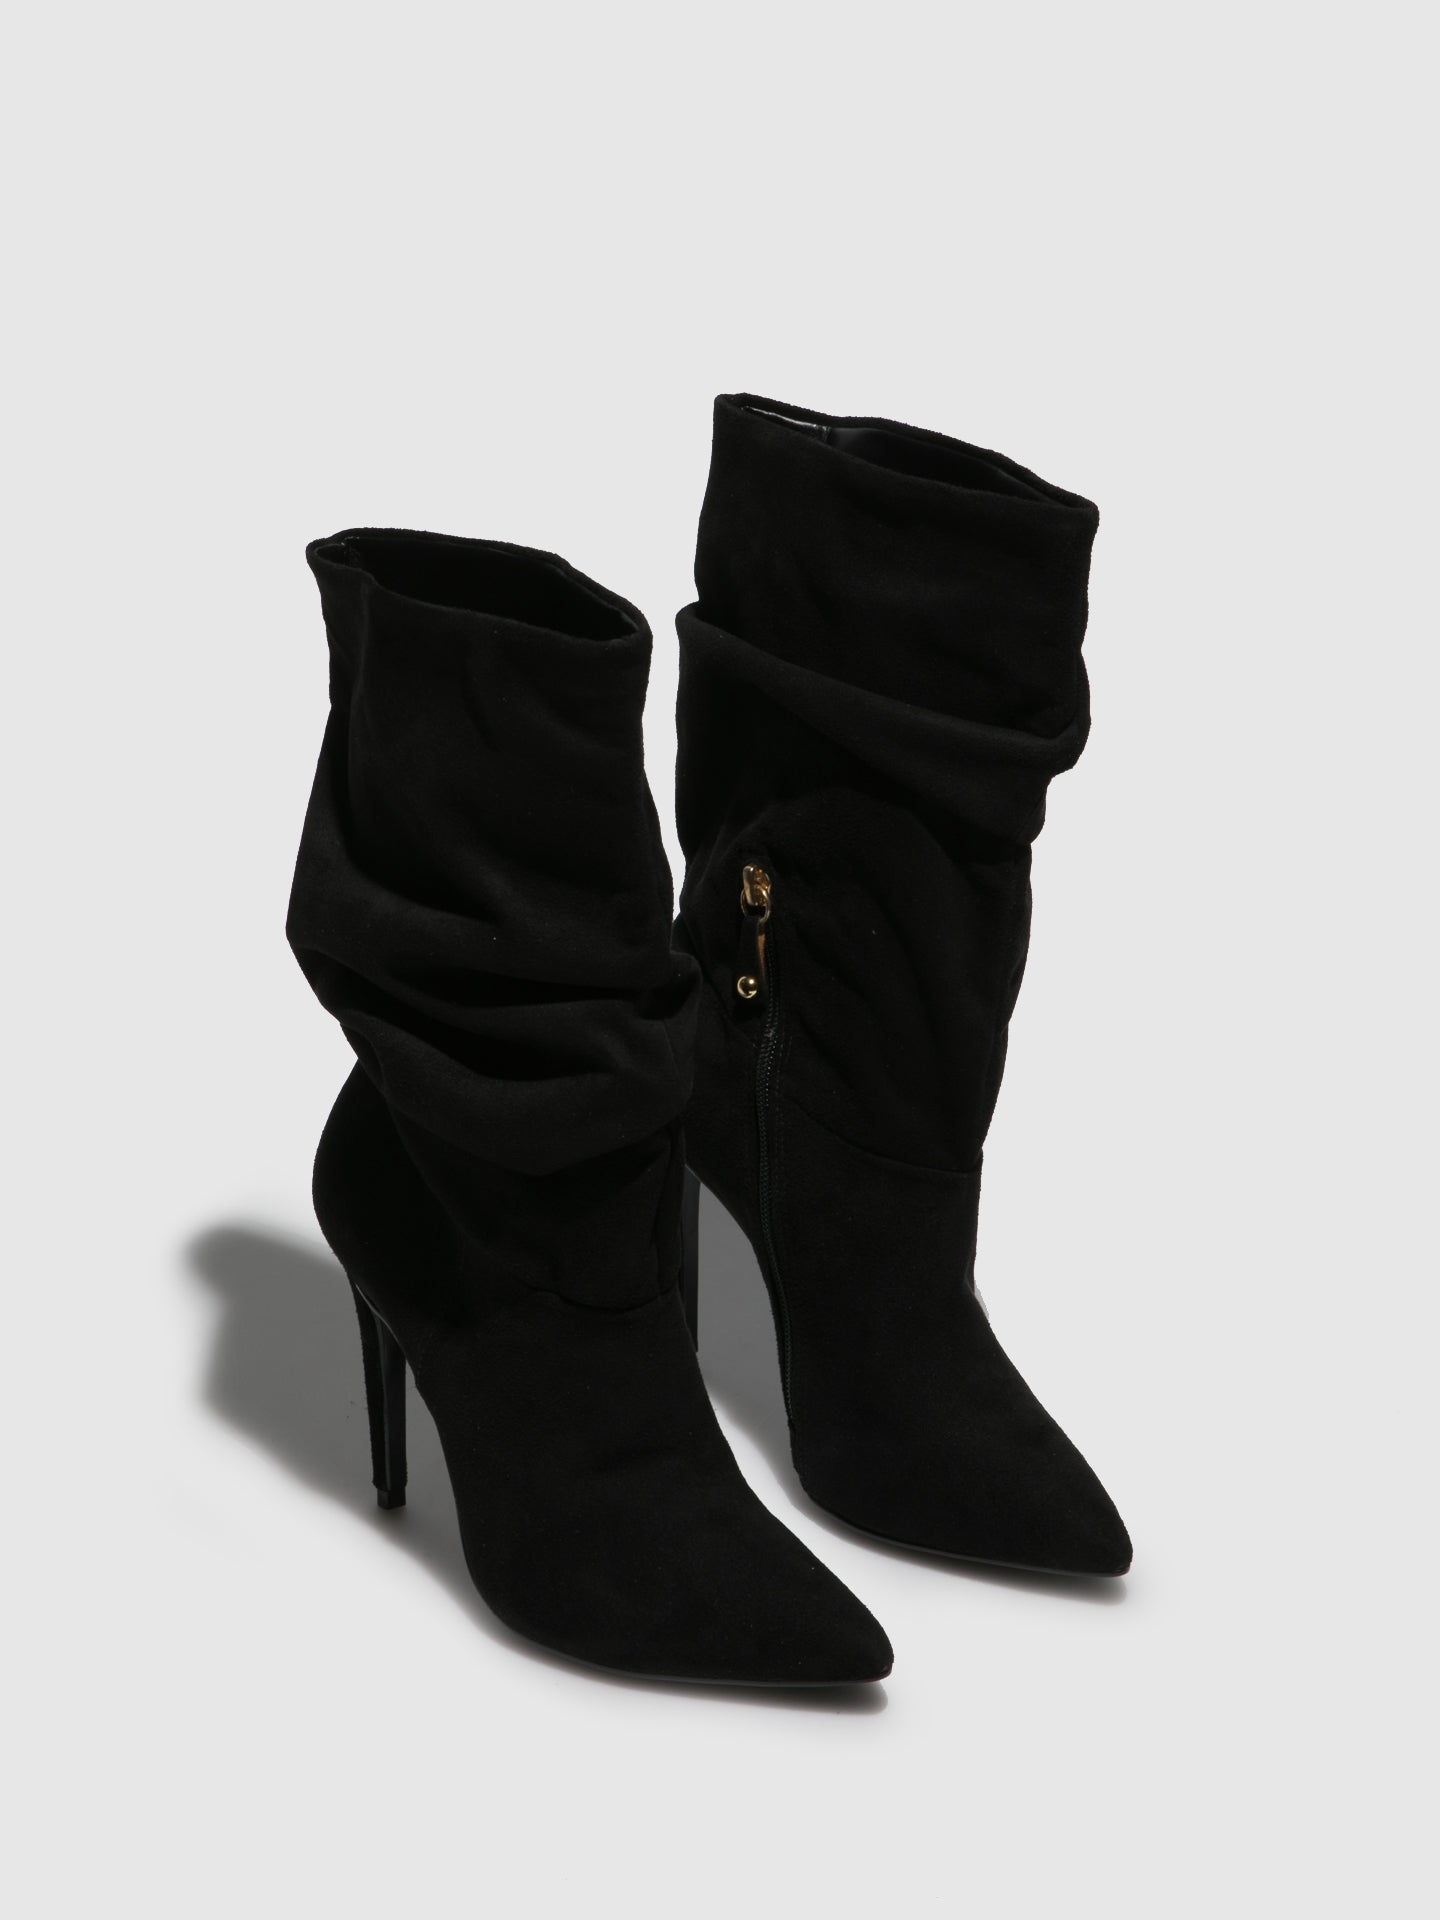 Parodi Passion Black Pointed Toe Boots